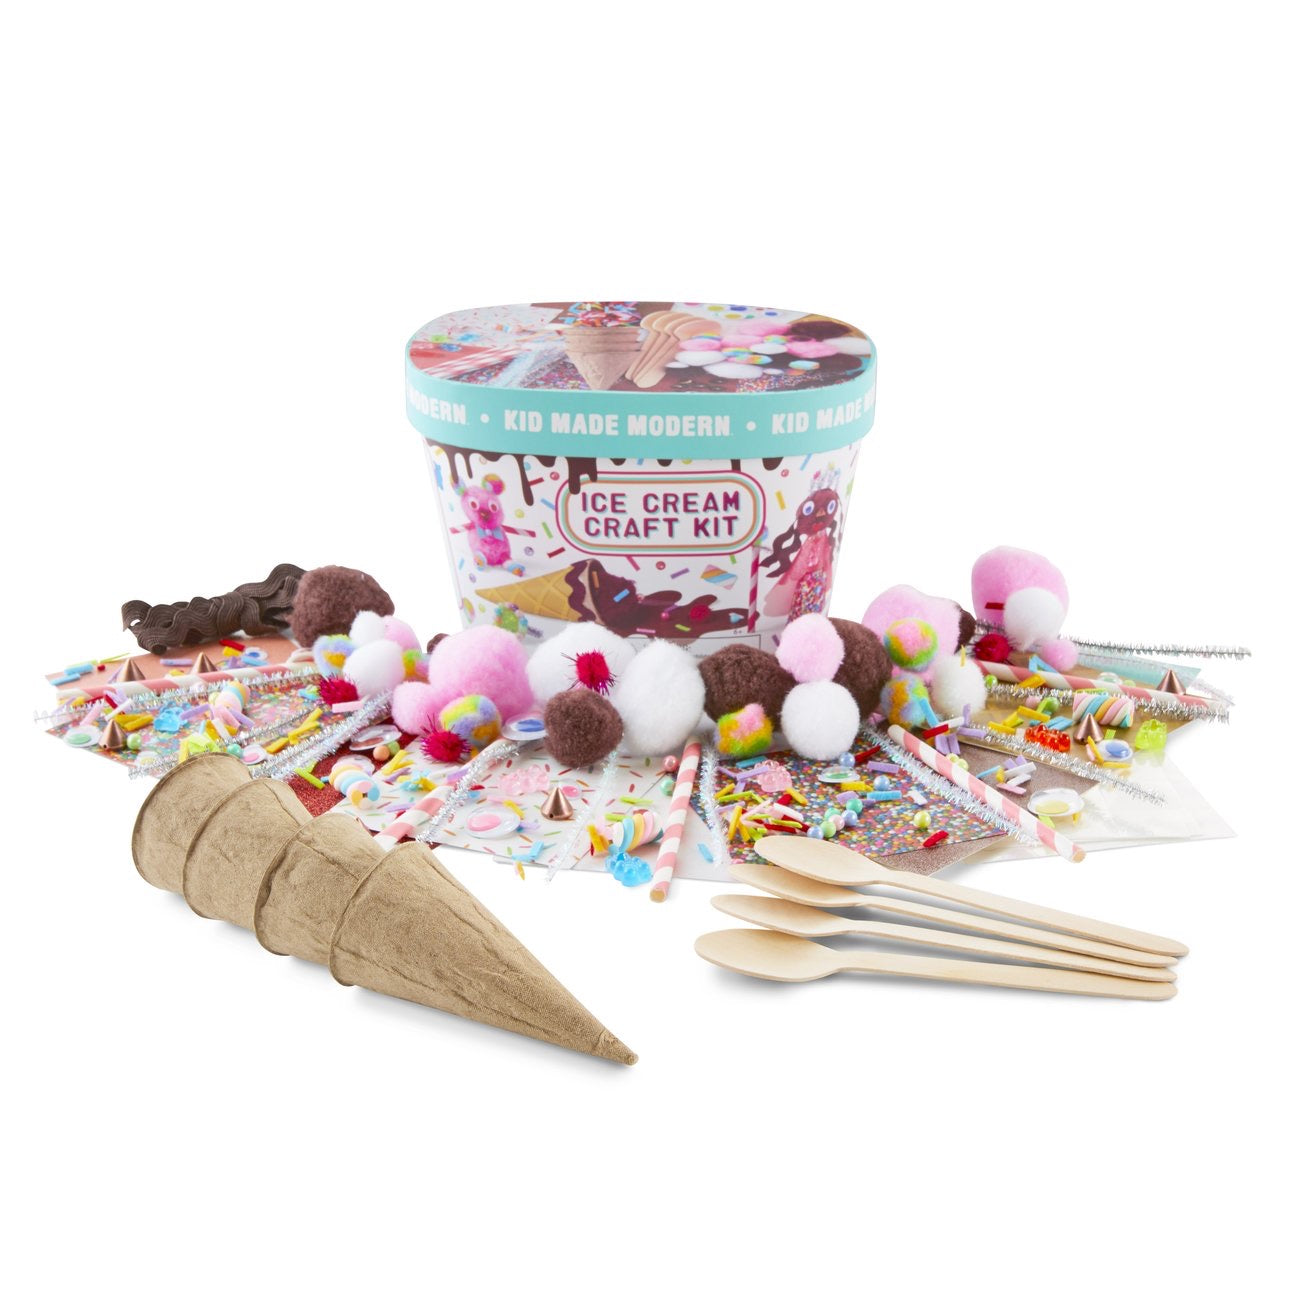 Creative Ice Cream Making Kit for Kids